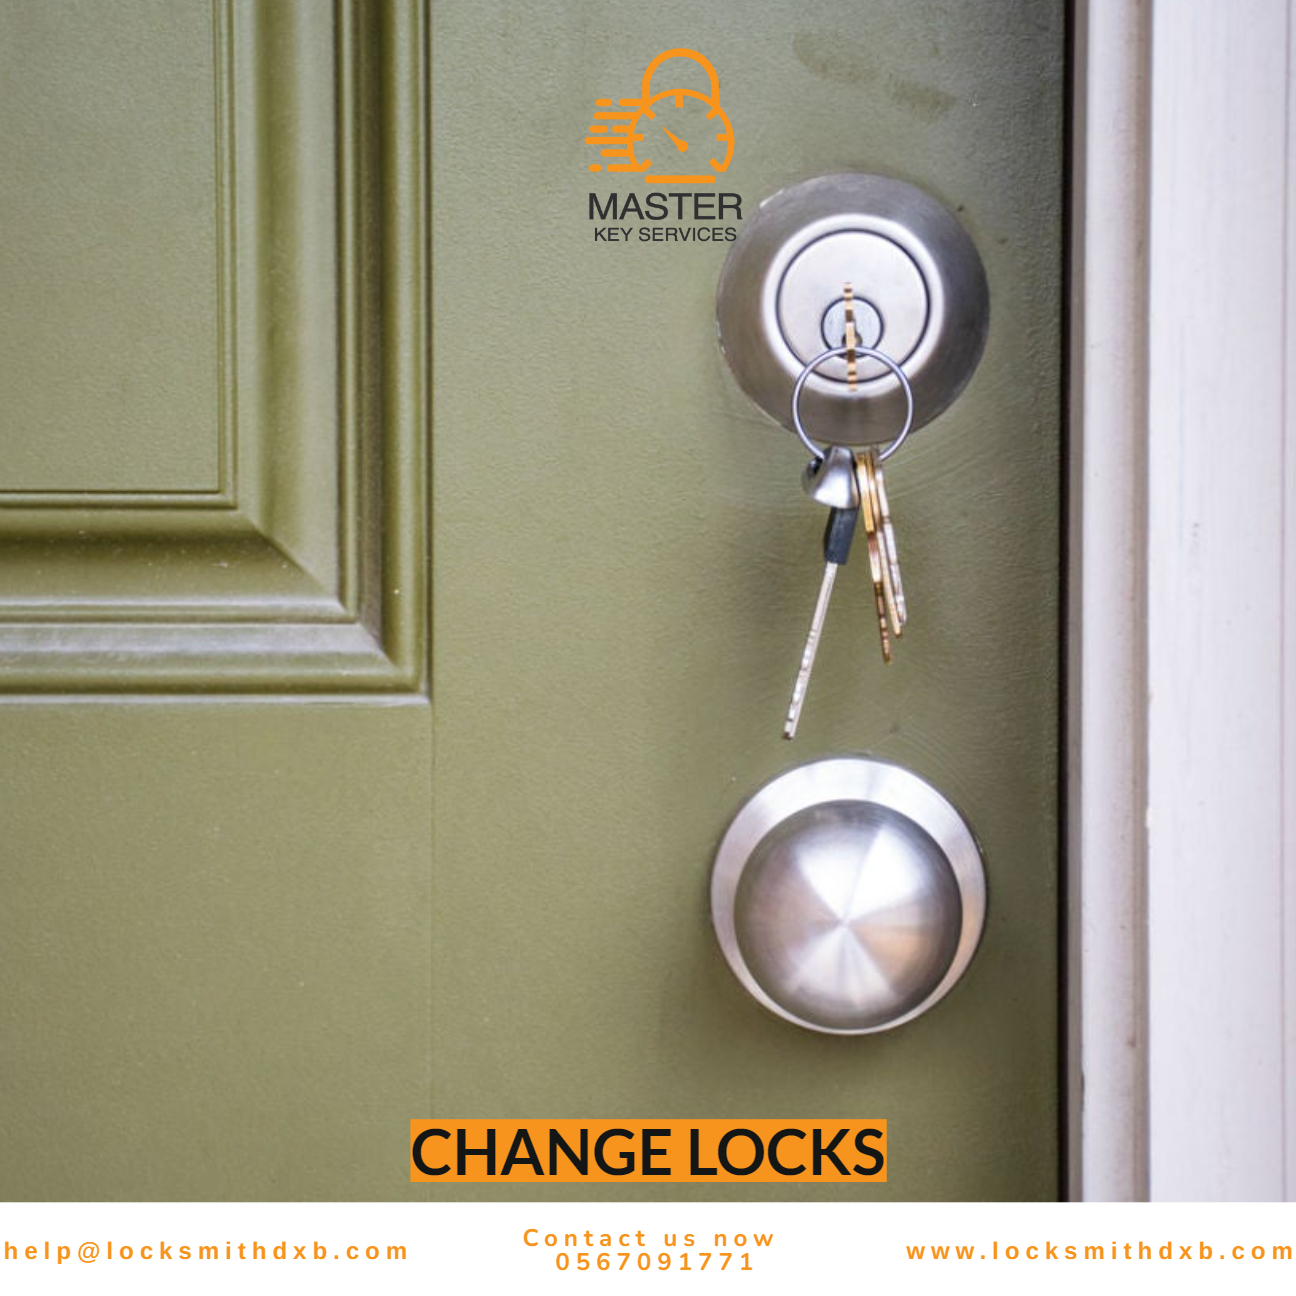 Change locks